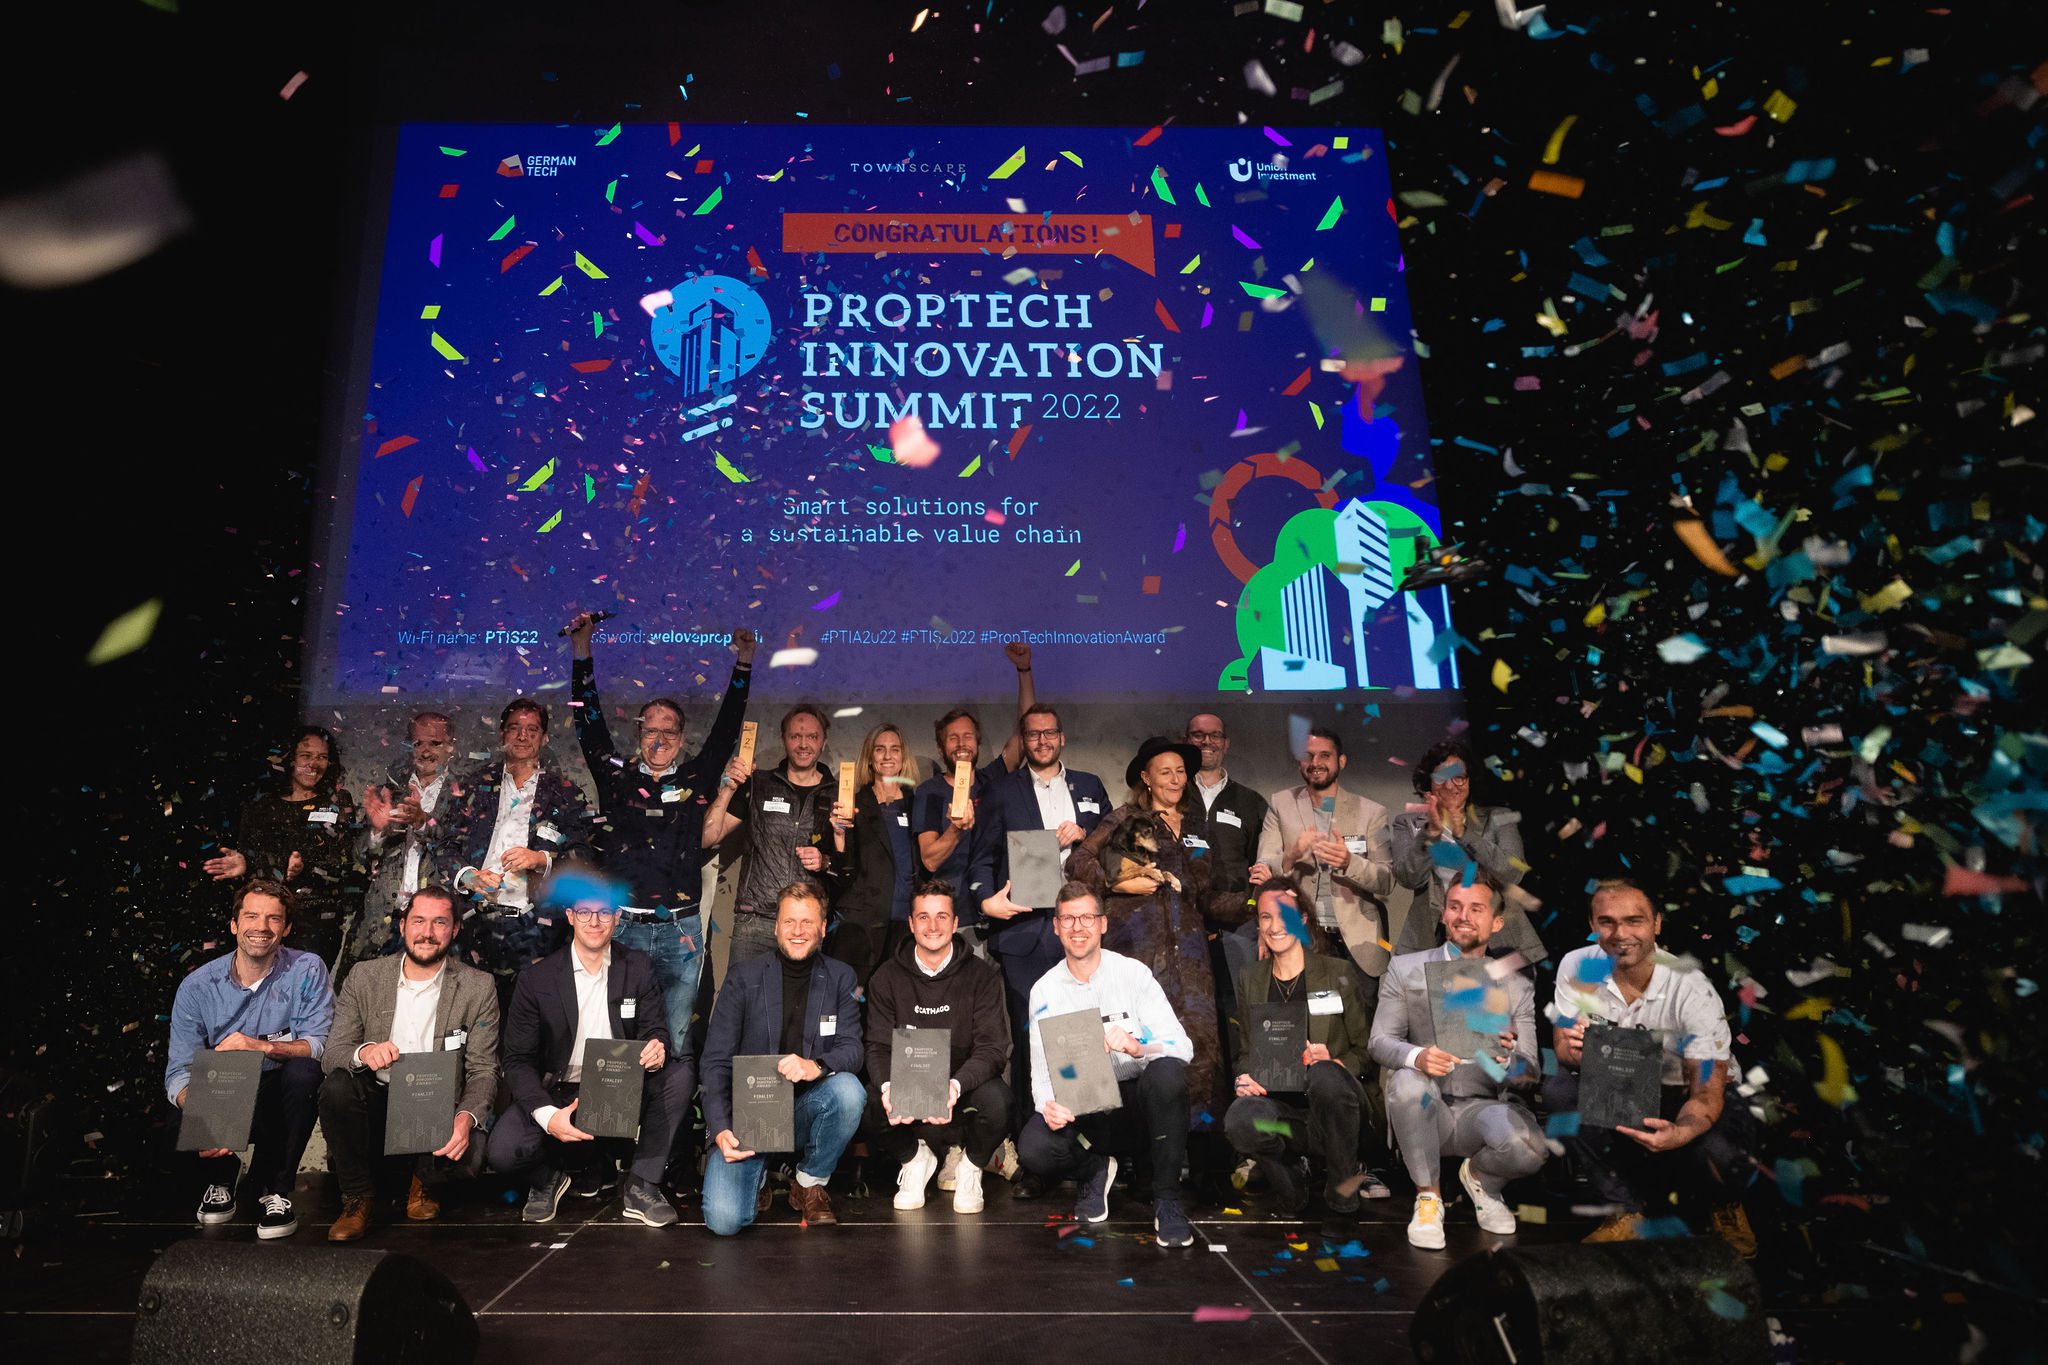 PropTech Innovation Award 2019, Finalists Ceremony